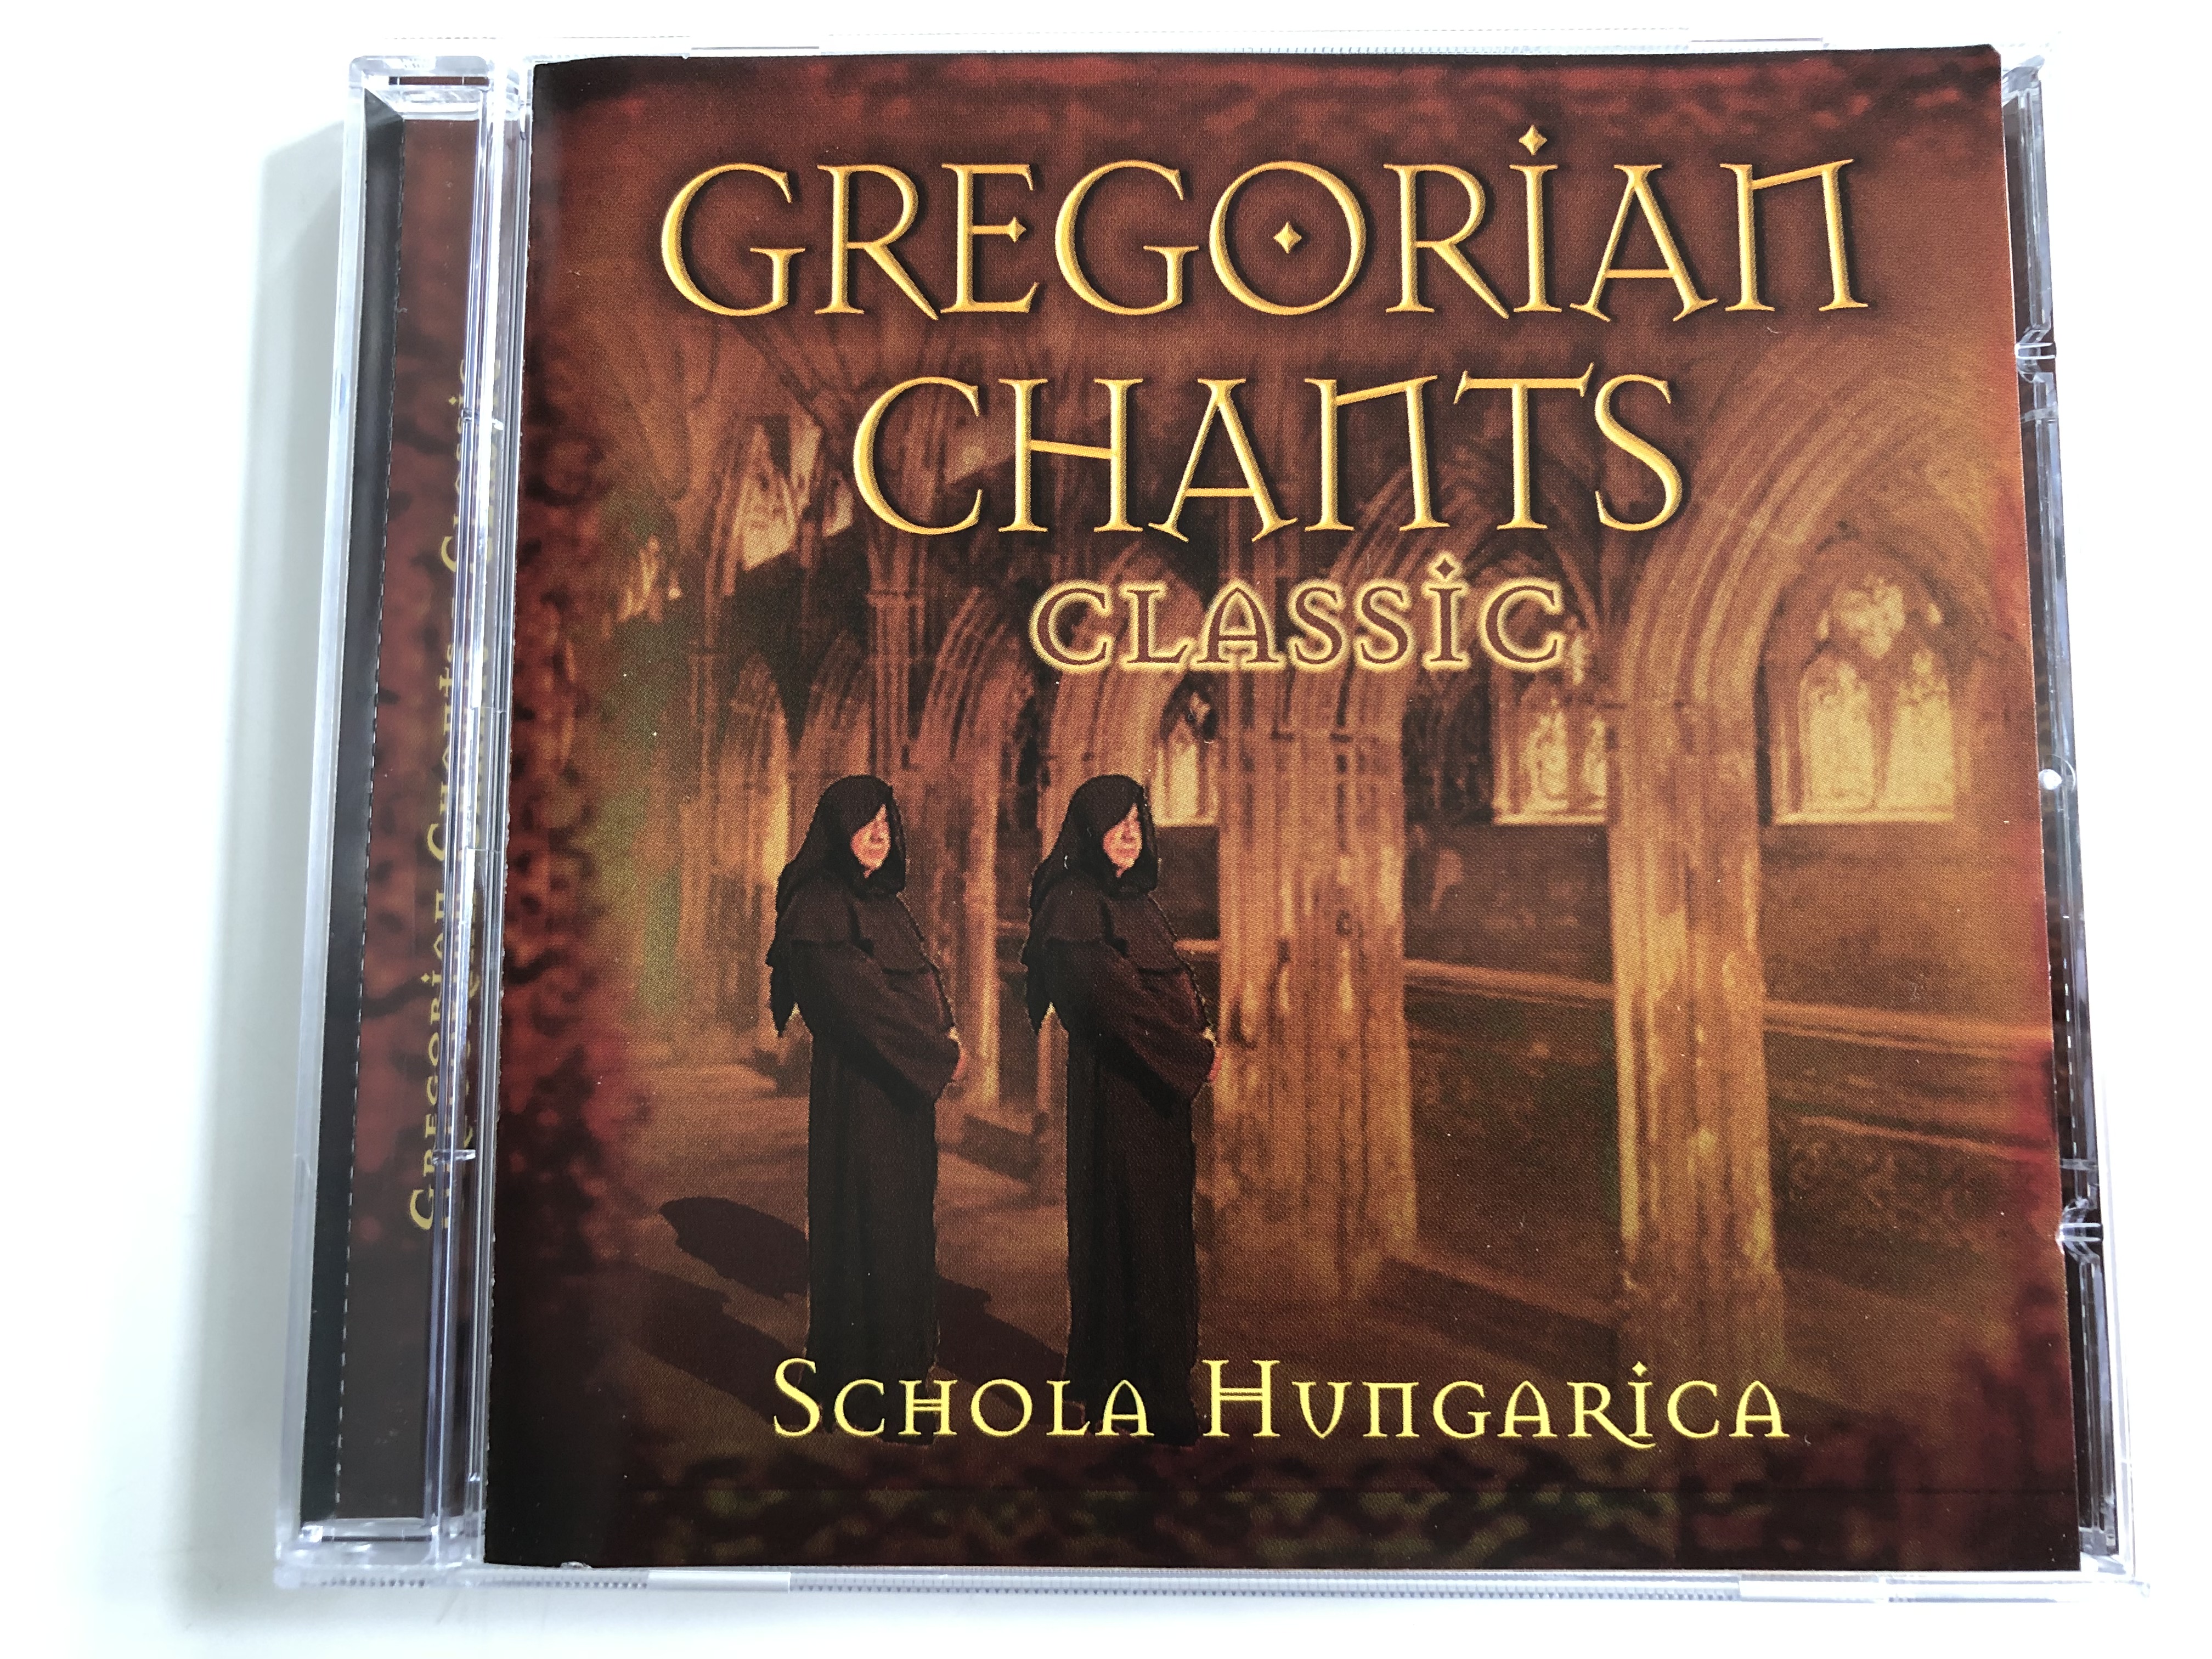 gregorian-chants-classic-schola-hungarica-a-play-audio-cd-2002-10511-2-1-.jpg